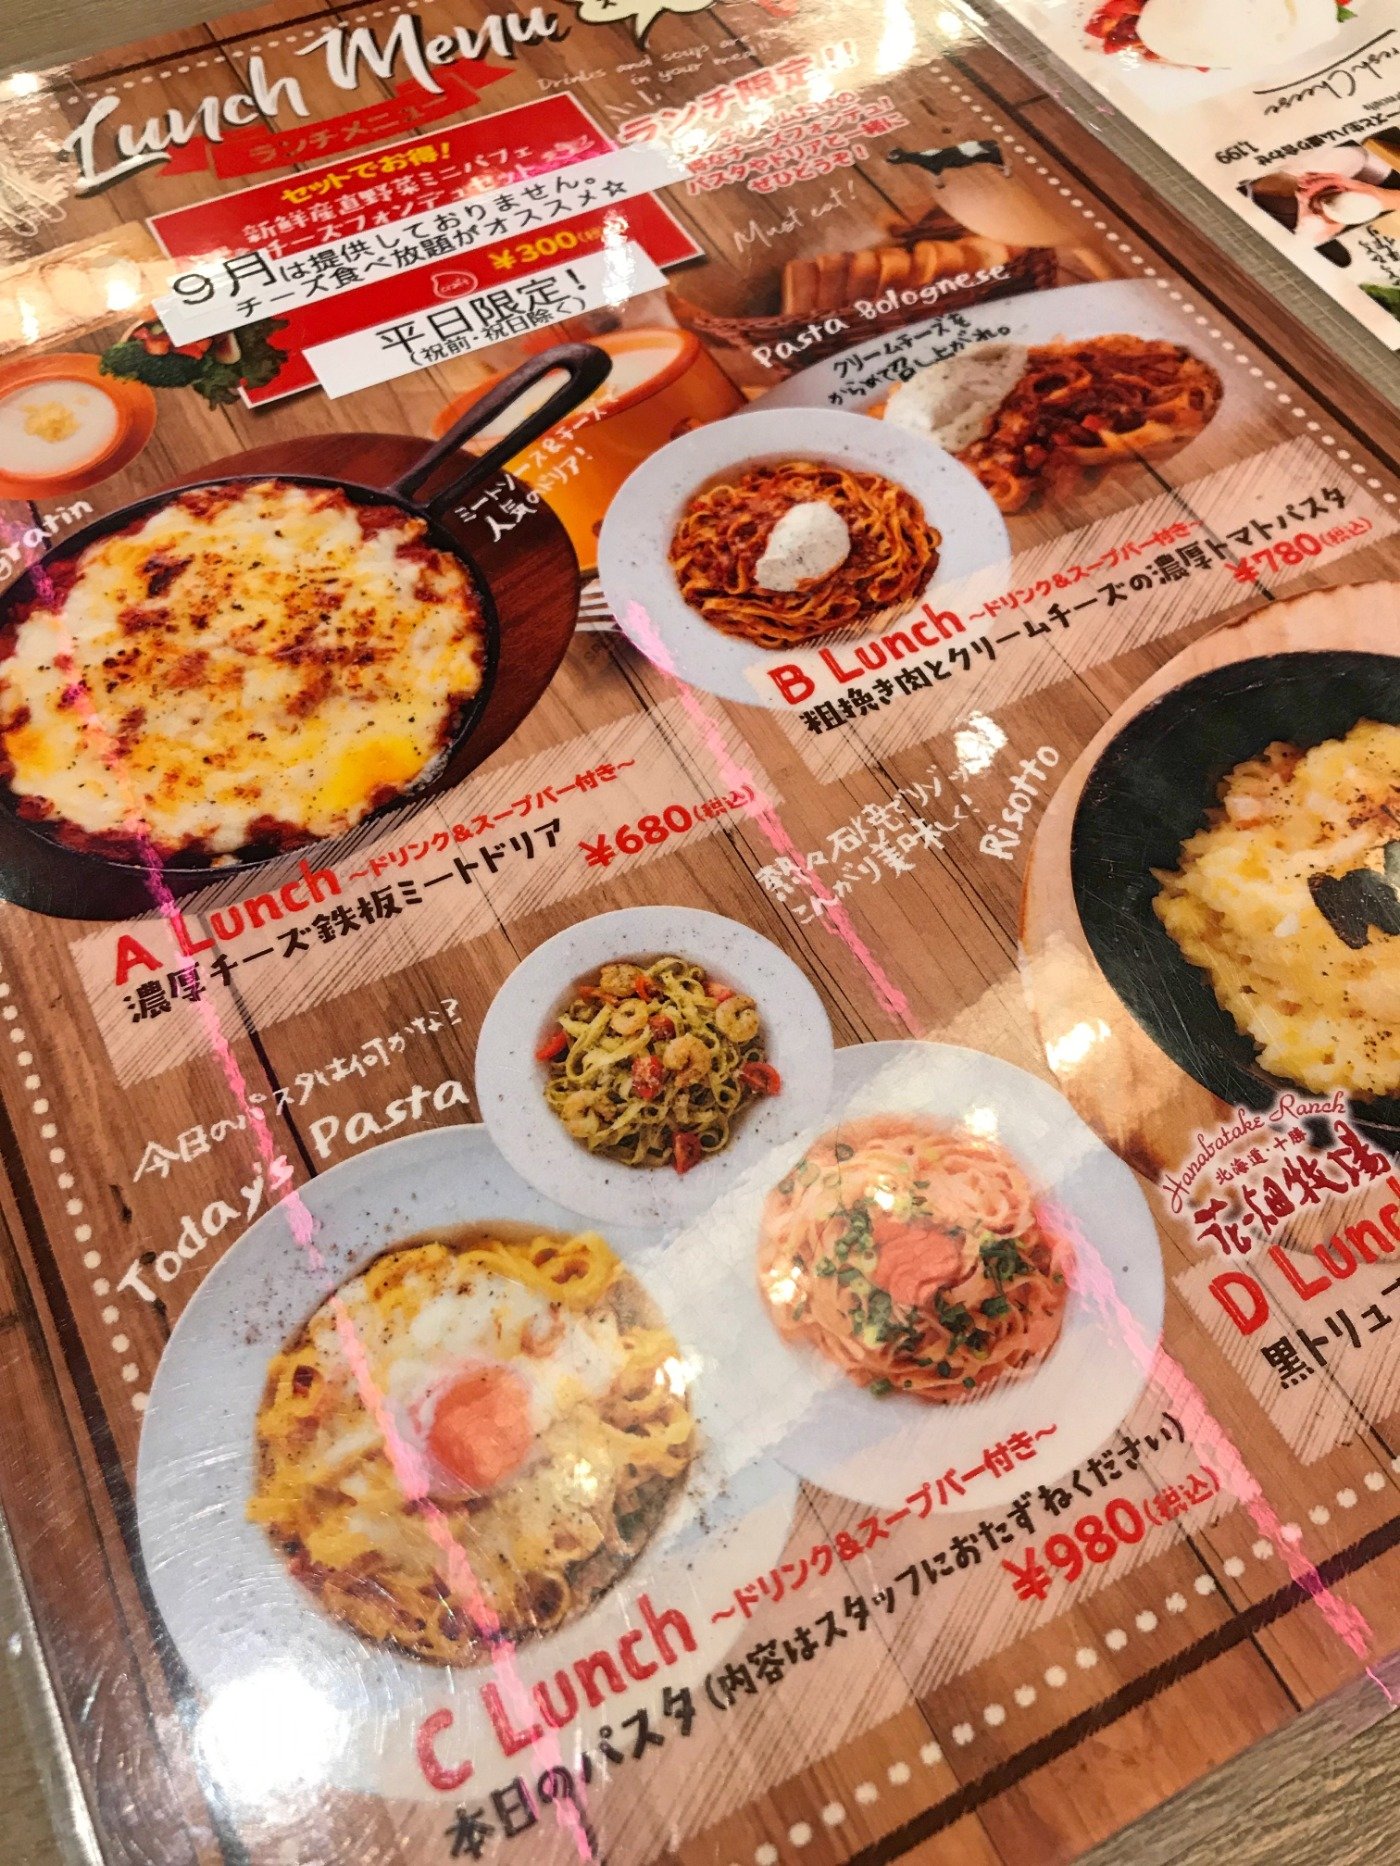 Craft Cheese Market 名駅店 Derauma Nagoya